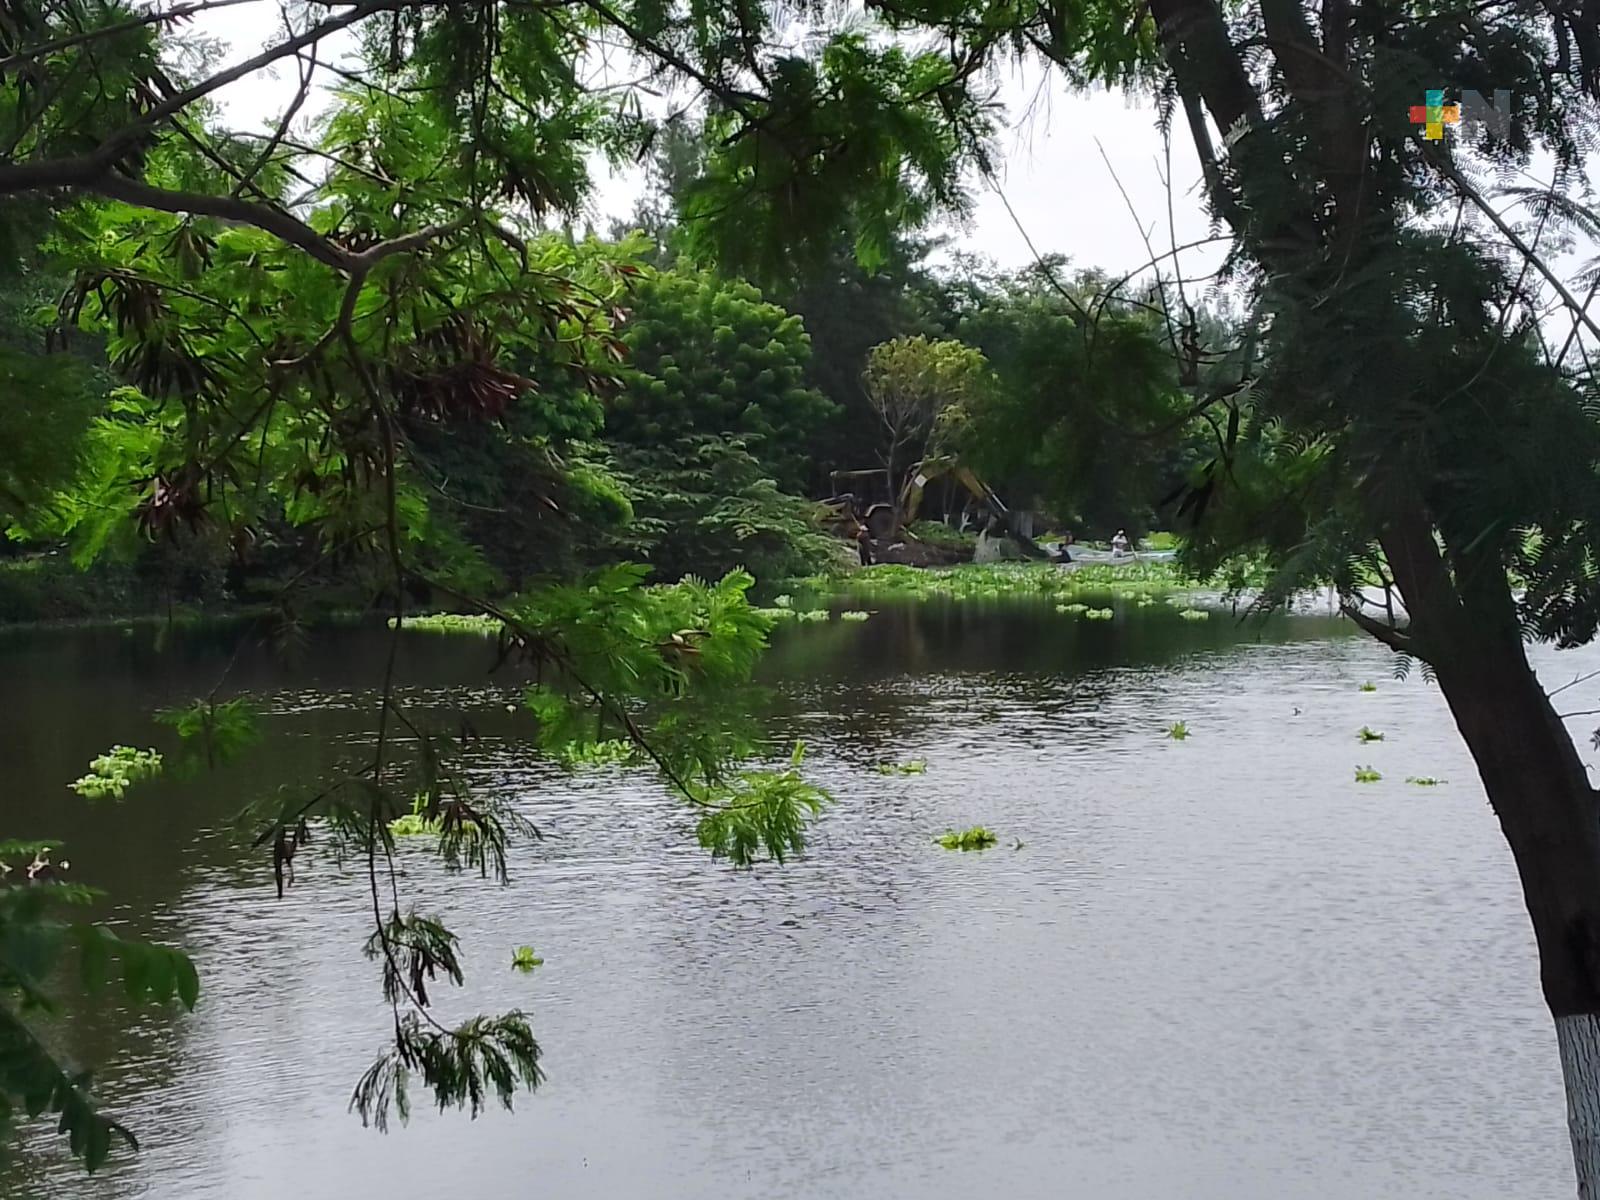 Vecinos confirman regreso de animales a laguna Lagartos tras ser saneada